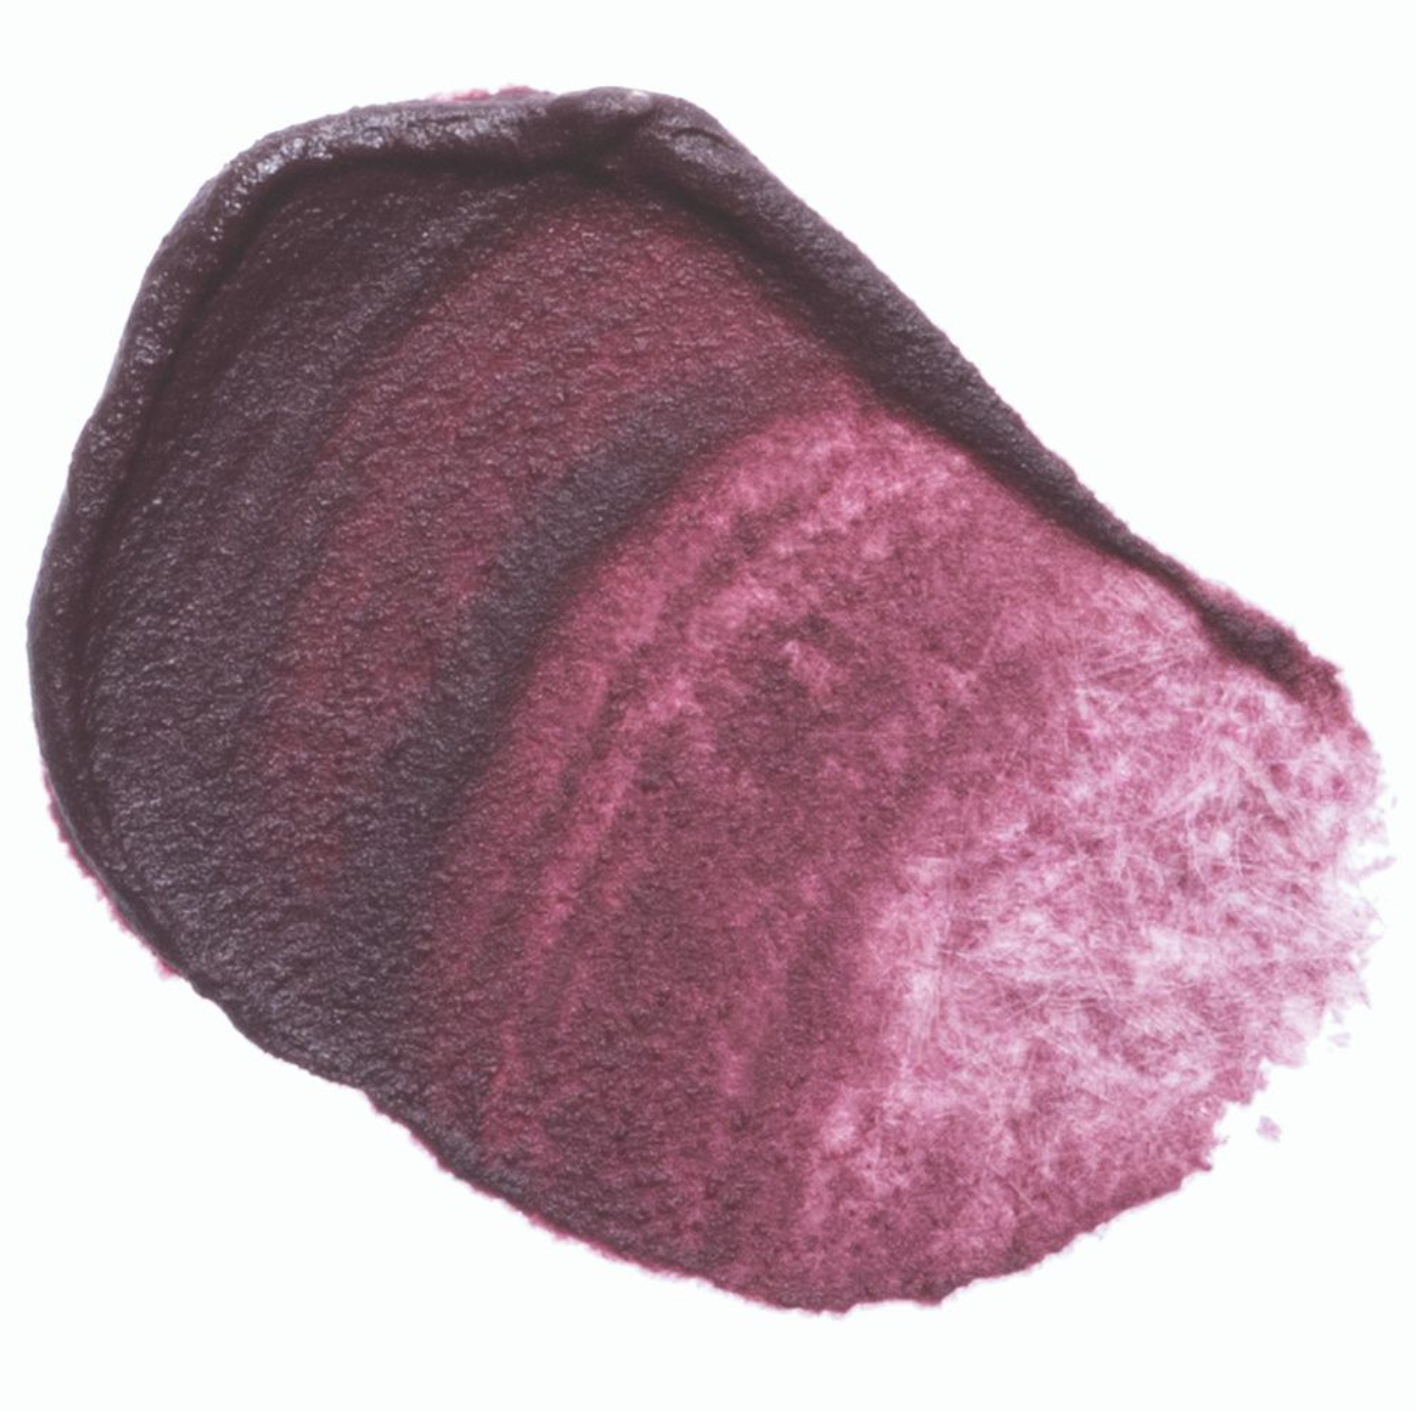 MUD Cosmetics Lipstick, Eggplant swatch